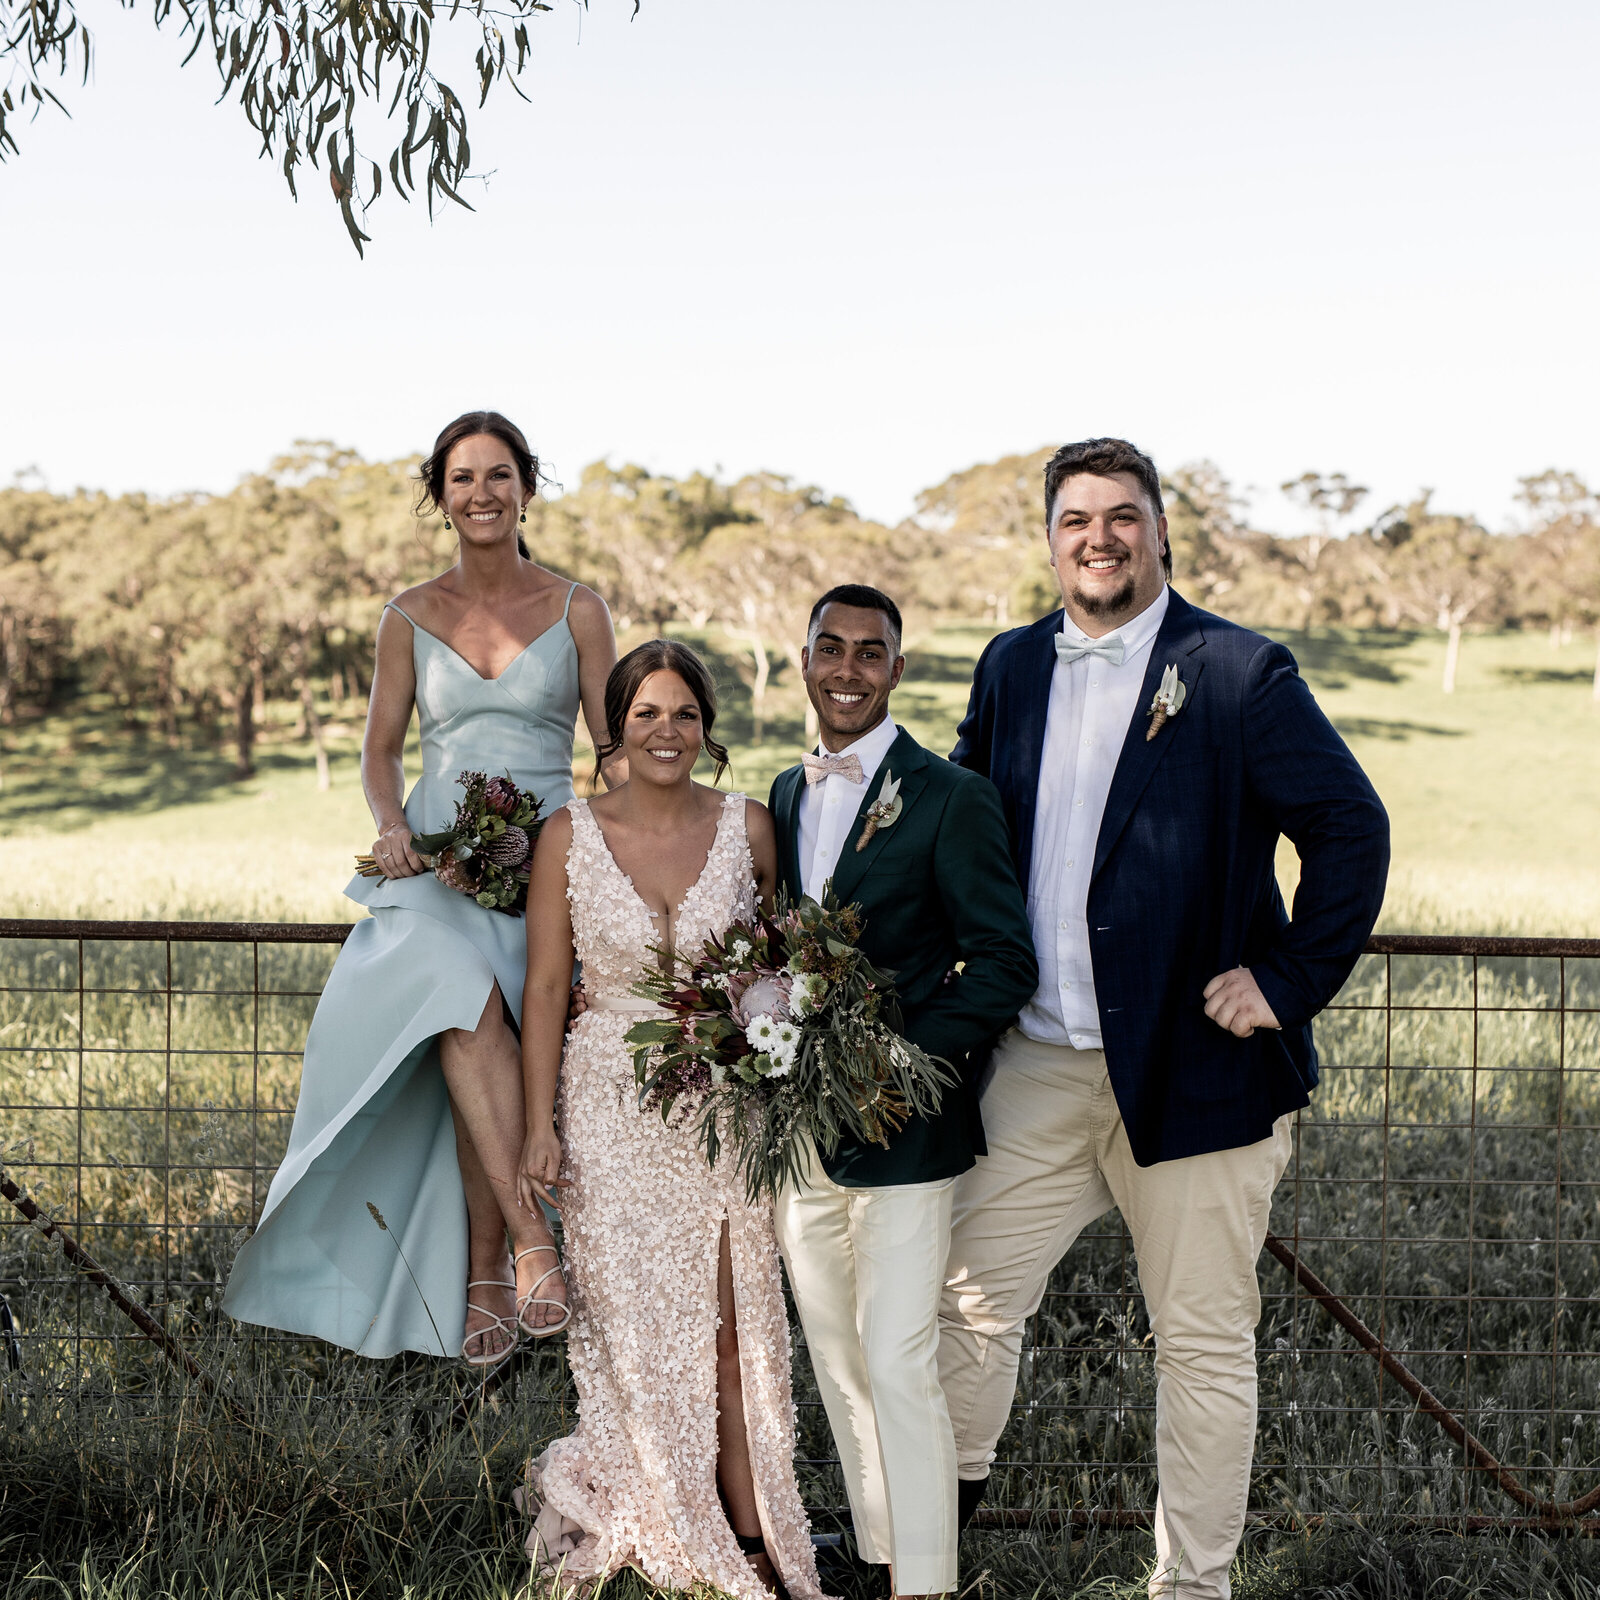 Chloe-Benny-Rexvil-Photography-Adelaide-Wedding-Photographer-320